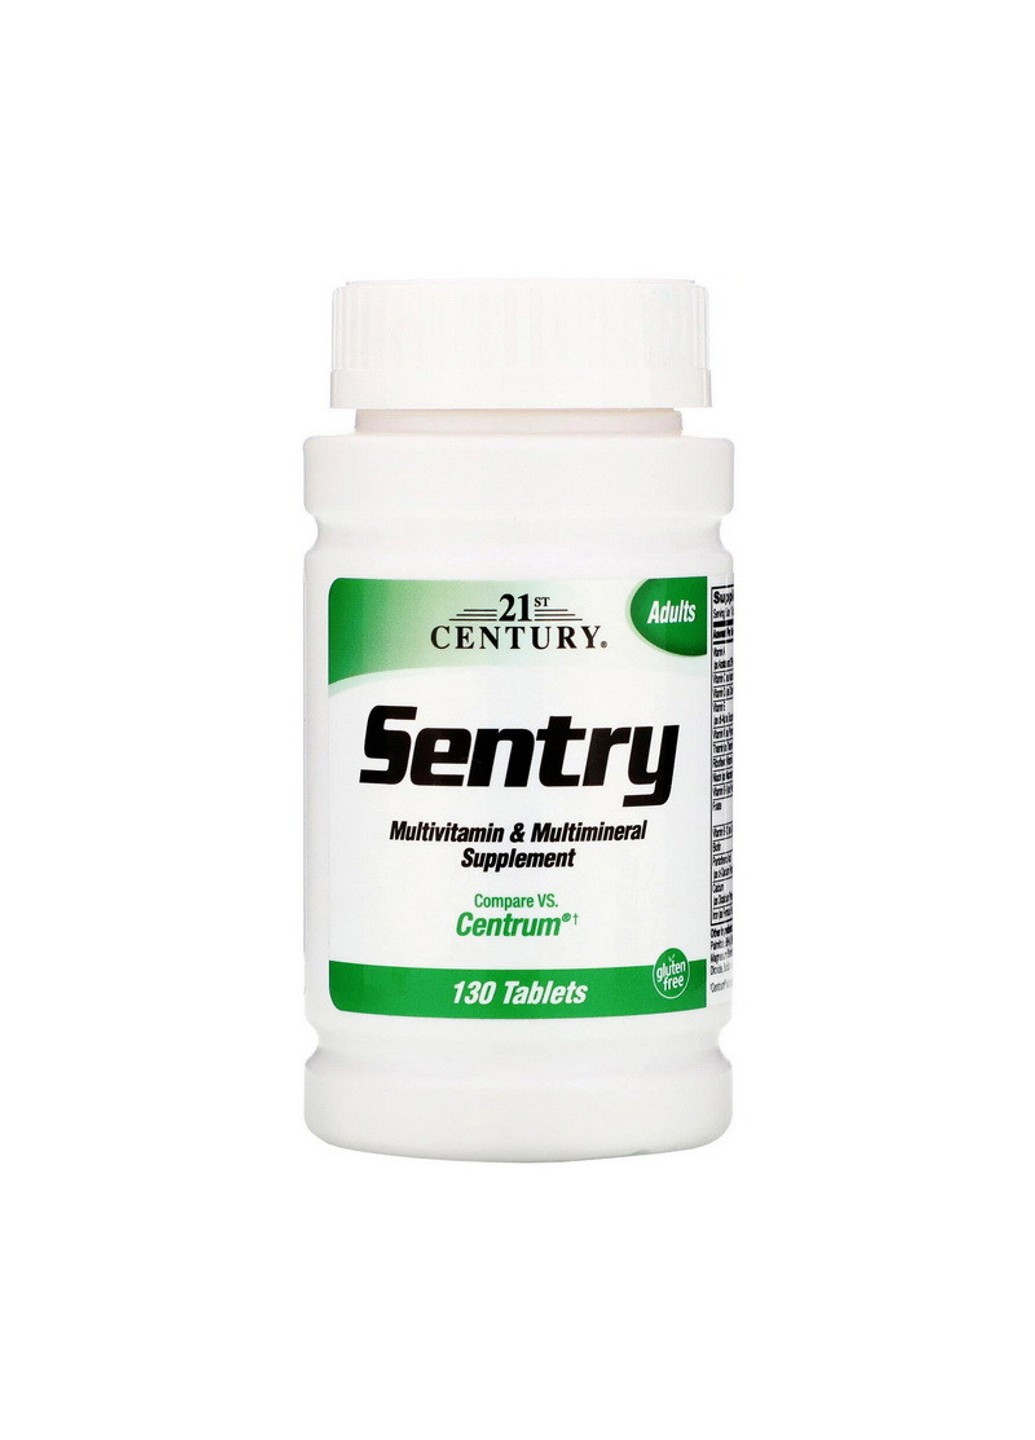 Комплекс витаминов Sentry Multivitamin & Multimineral Supplement (130 таб) 21 век центури 21st Century (255409629)